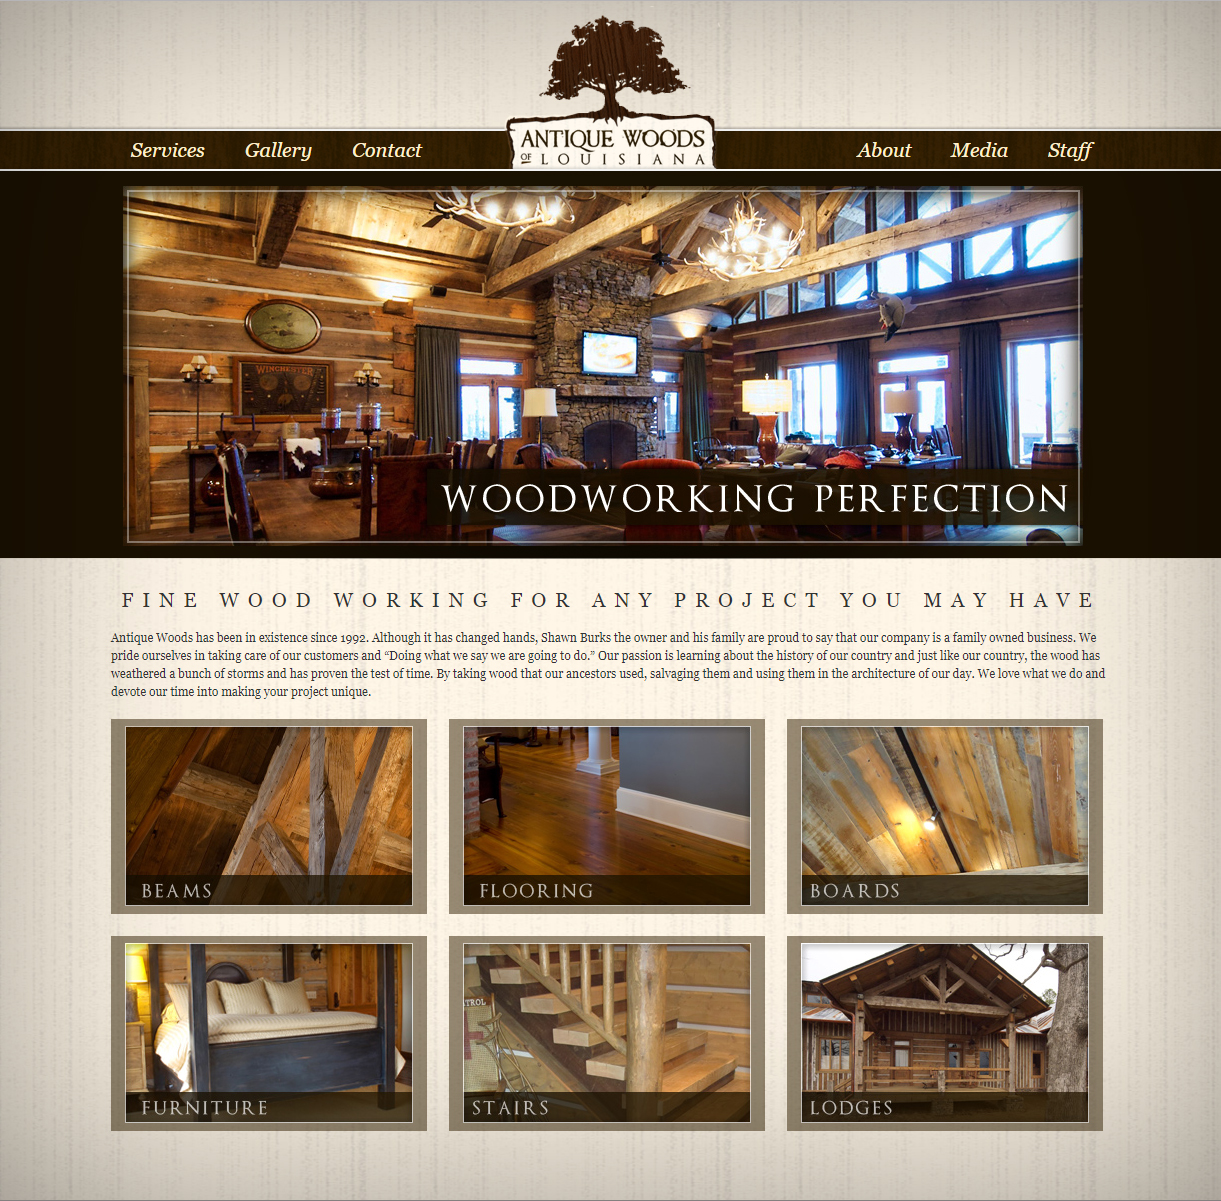 A woodworking web design screenshot for a company in Lafayette LA